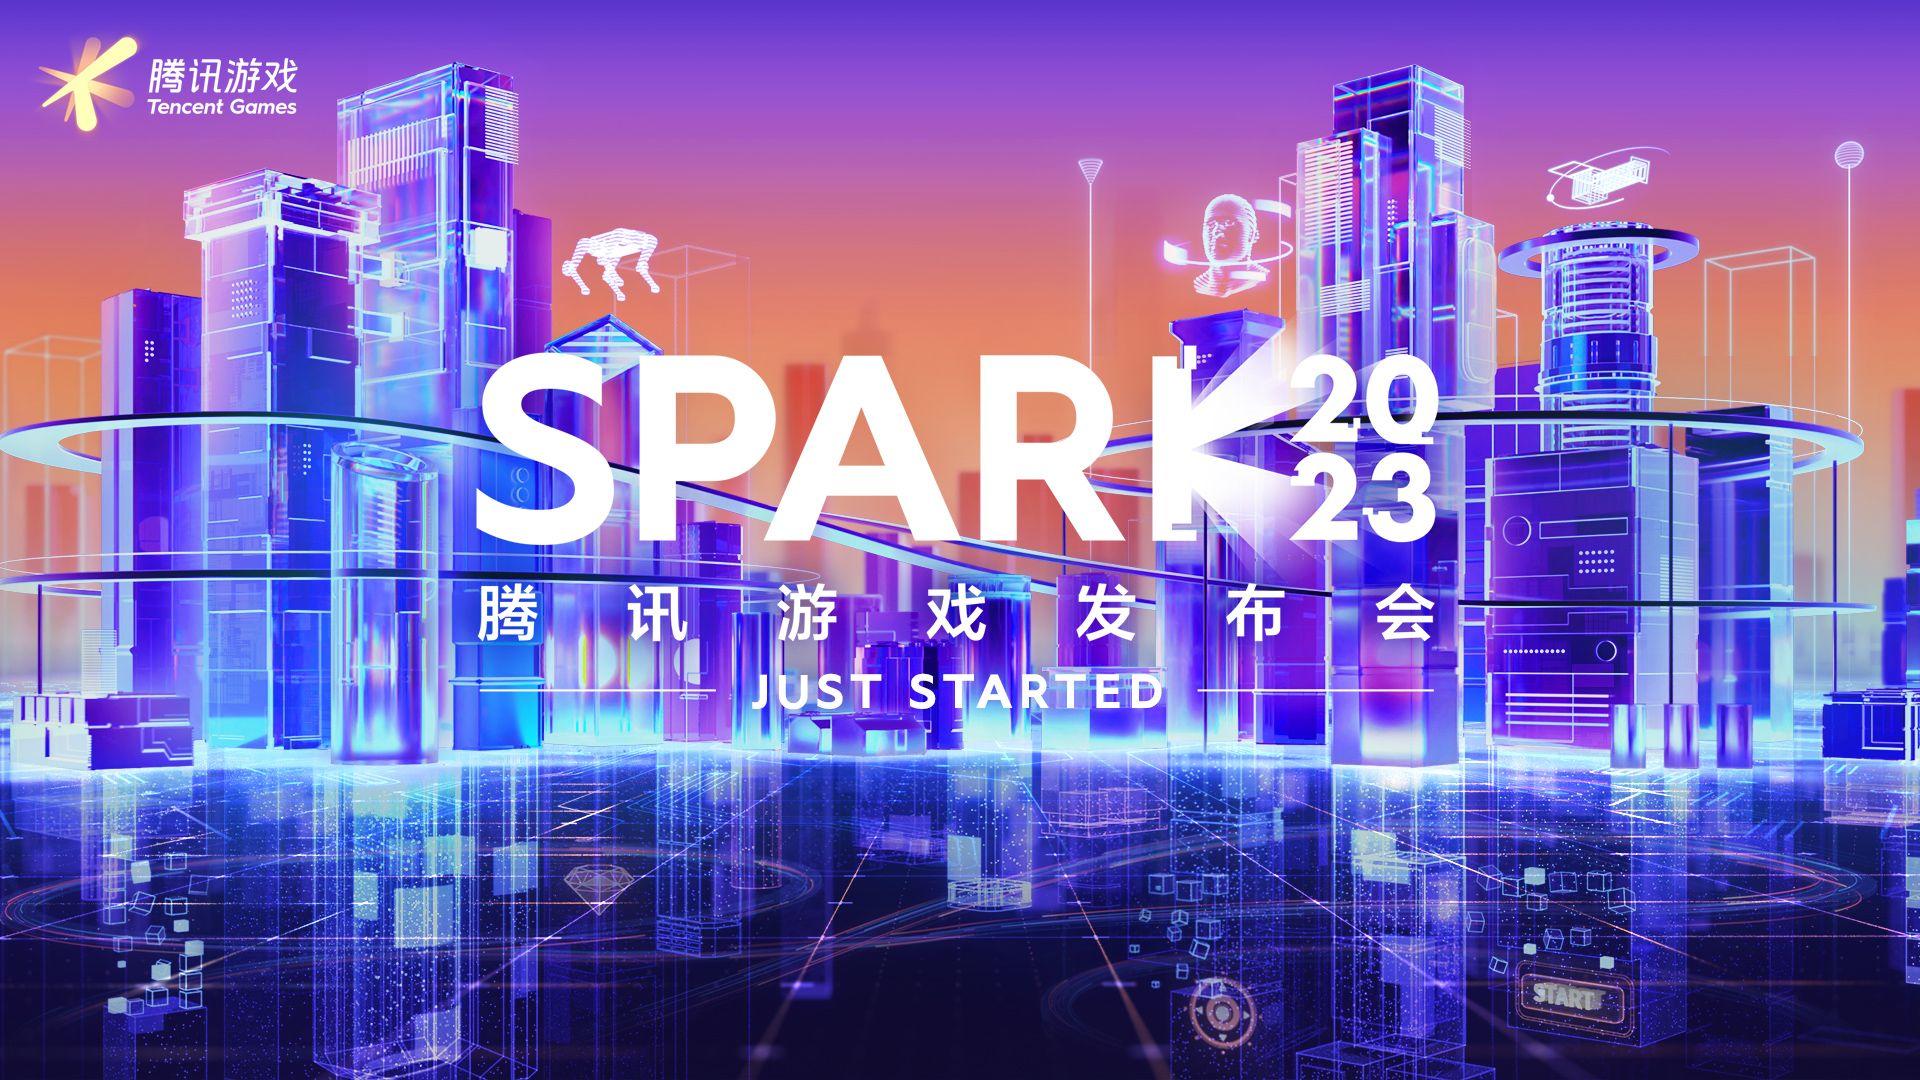 Spark2023腾讯游戏发布会游戏截图